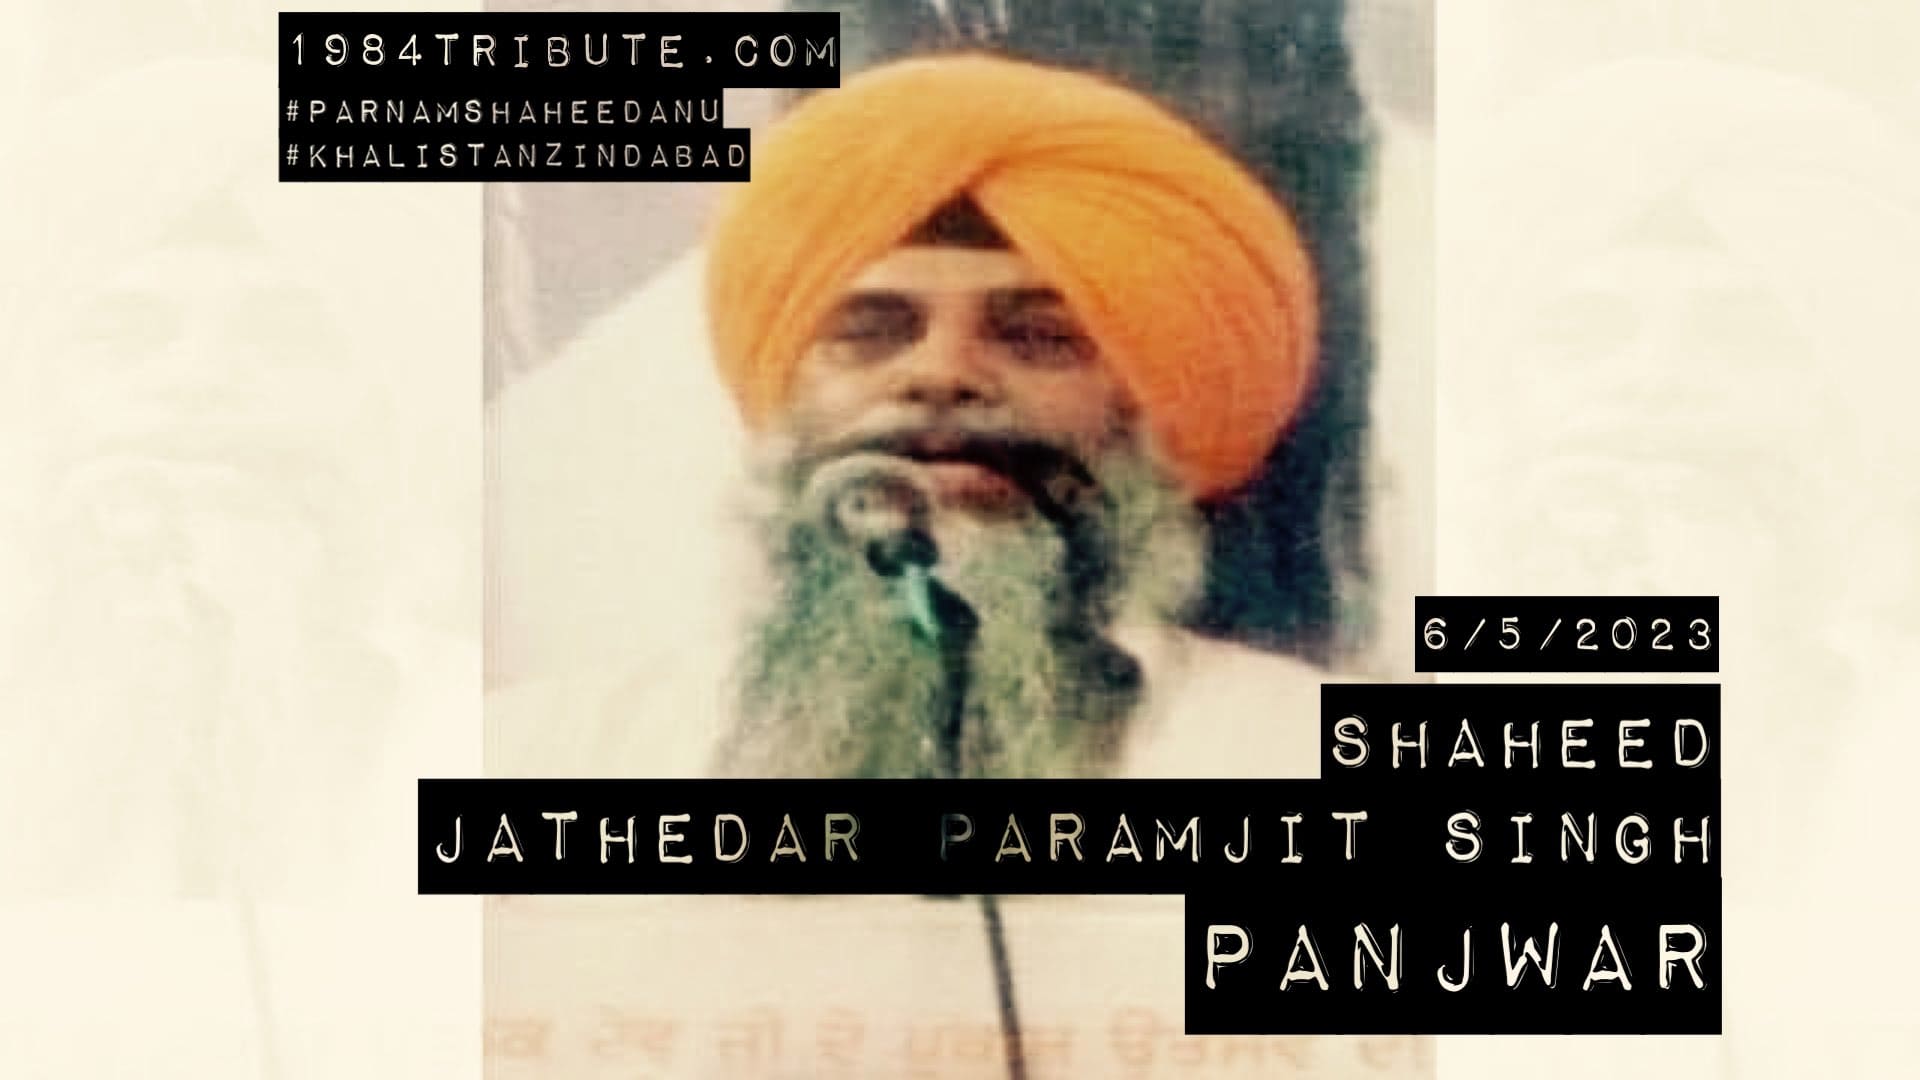 Khalistani terrorist Paramjit Singh Panjwad 